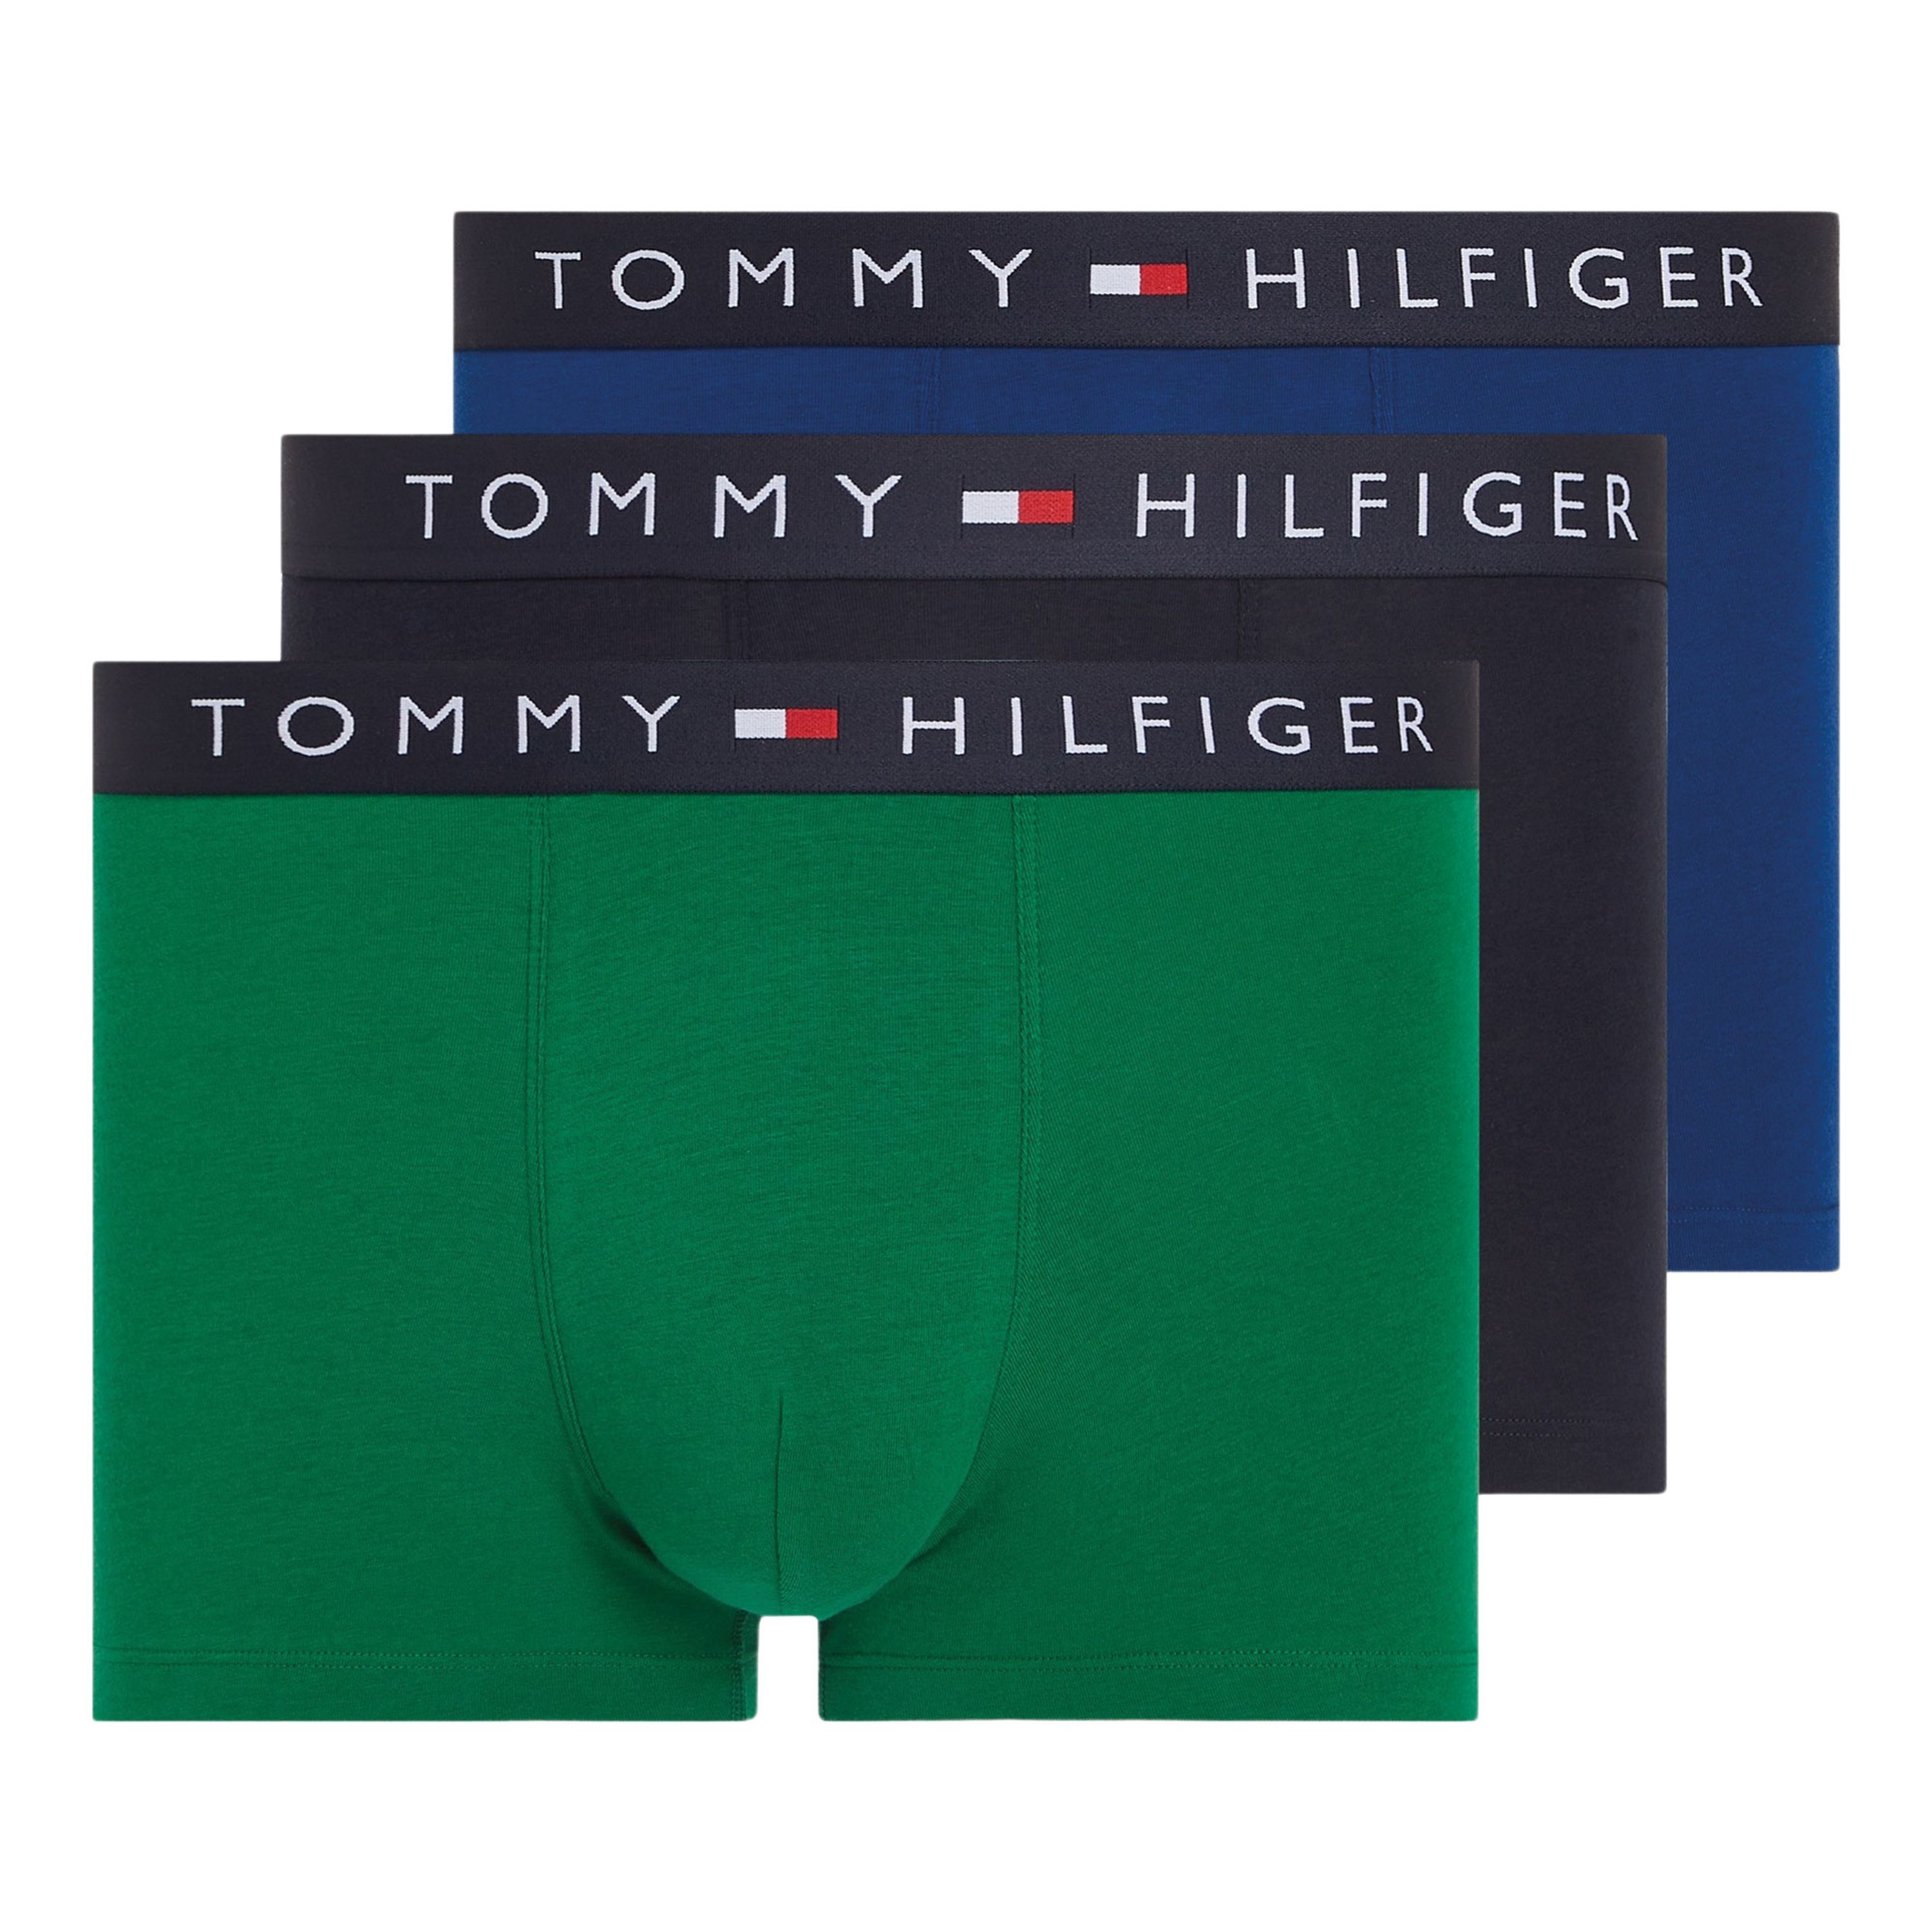 Tommy Hilfiger Original Boxershorts Heren (3-pack)